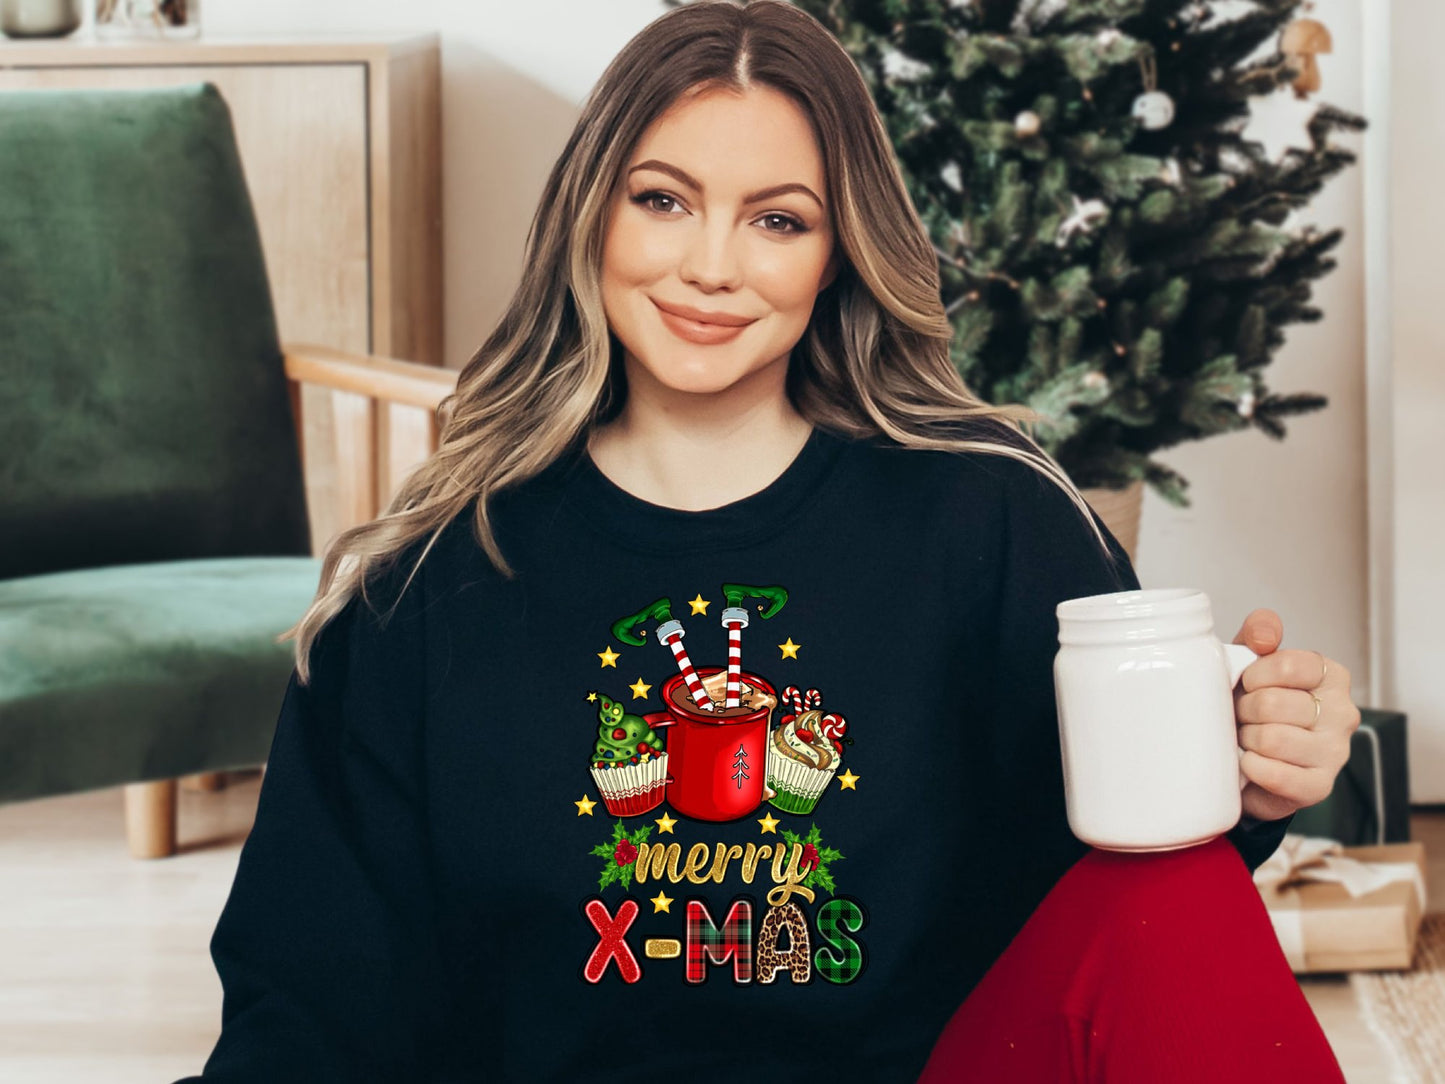 Merry Christmas Elf in Cup Sweatshirt, Funny Christmas Shirt for Women, Christmas Crewneck, funny Holiday Sweater, Plus Size Options - Mardonyx Sweatshirt